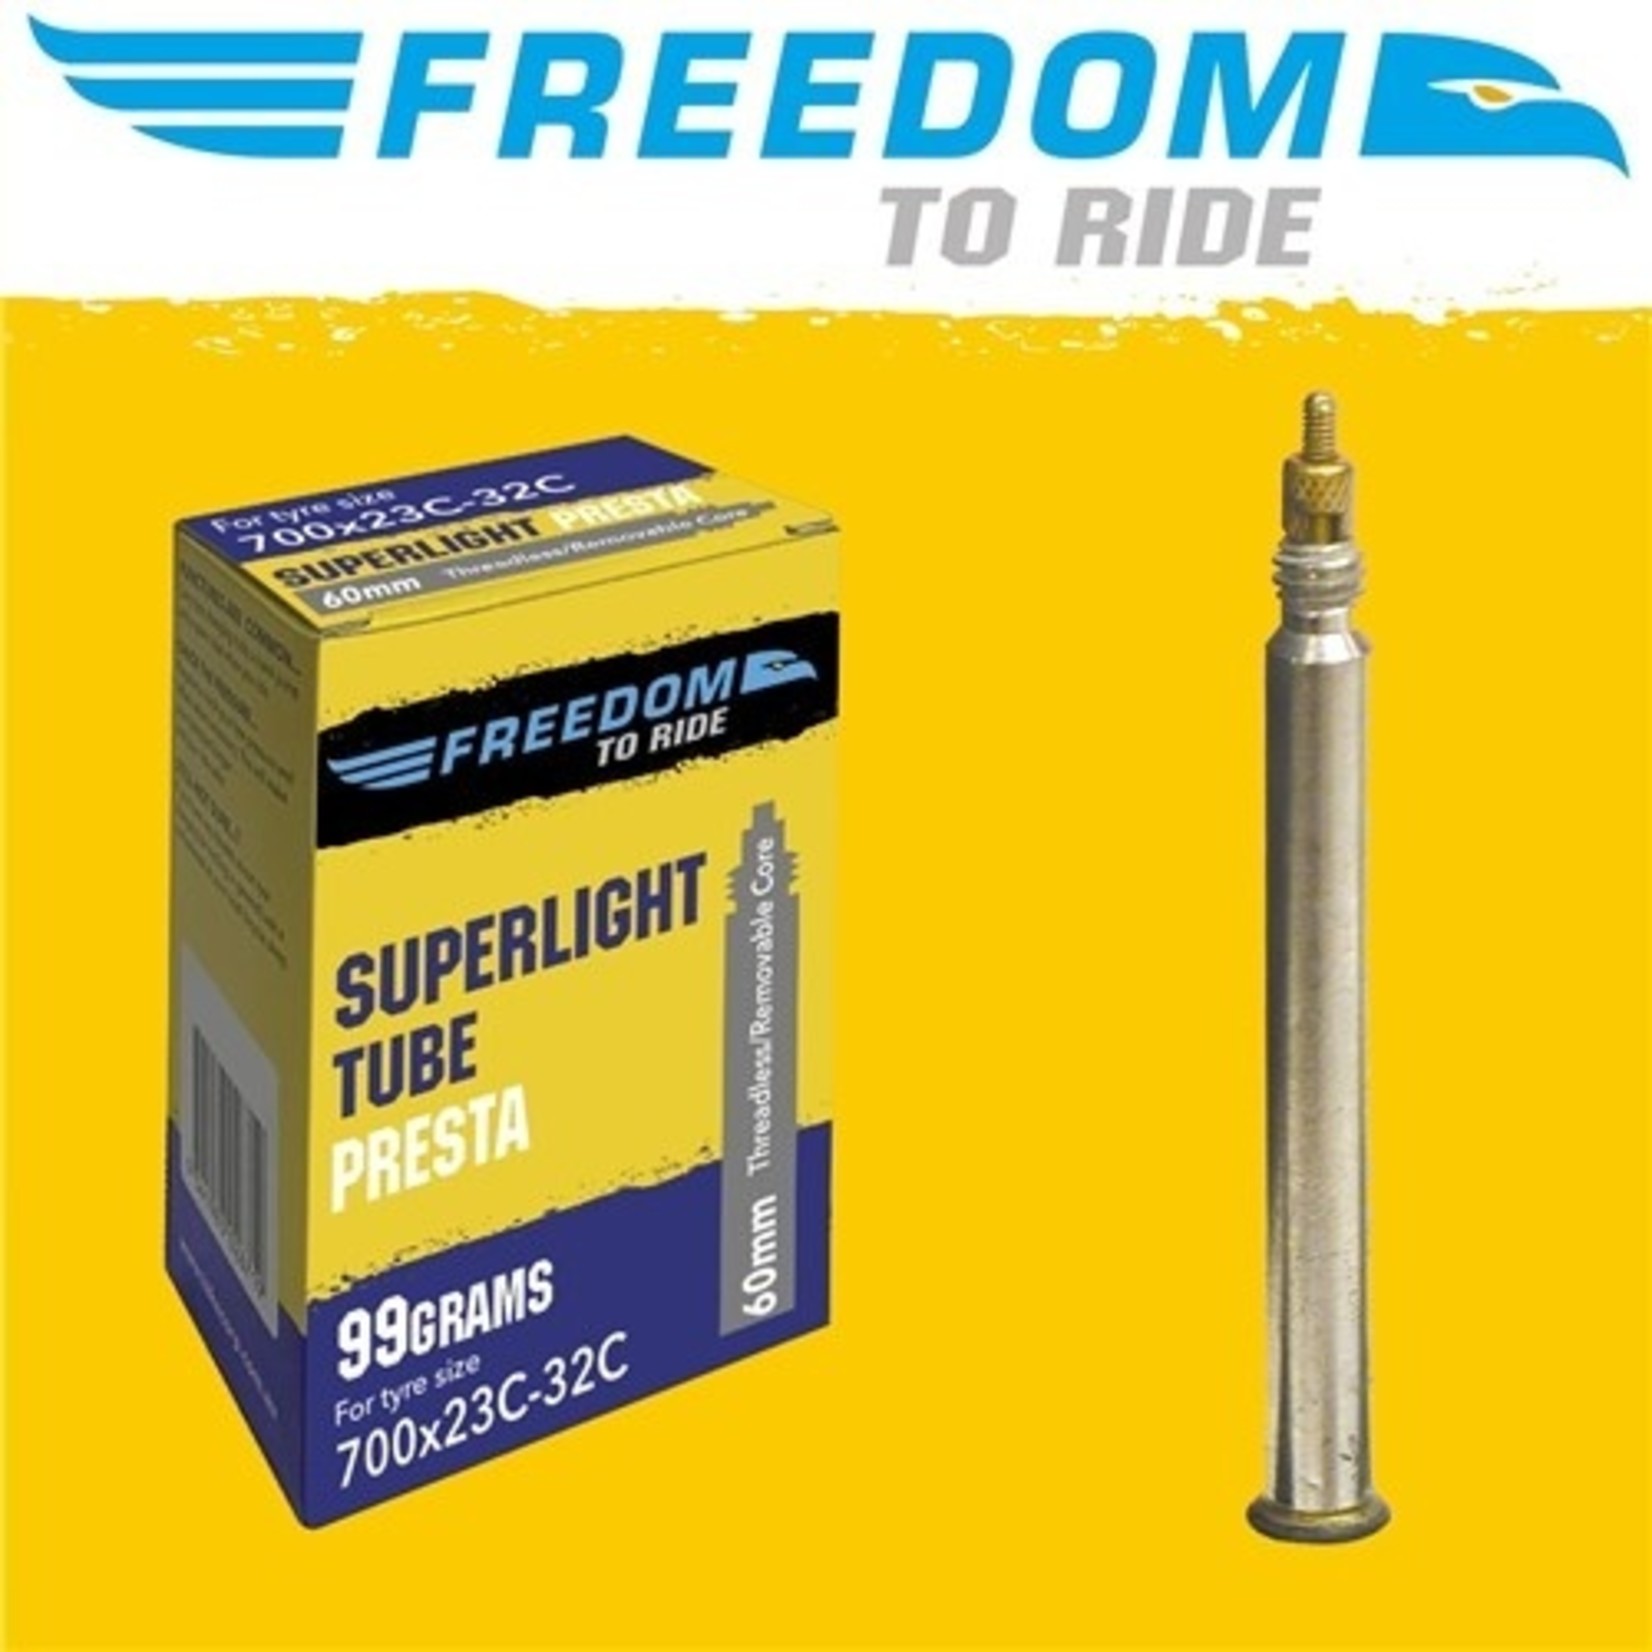 Freedom Freedom Bike Tube Superlight 60mm Presta 700x23C-32C Threadless/Removable Core